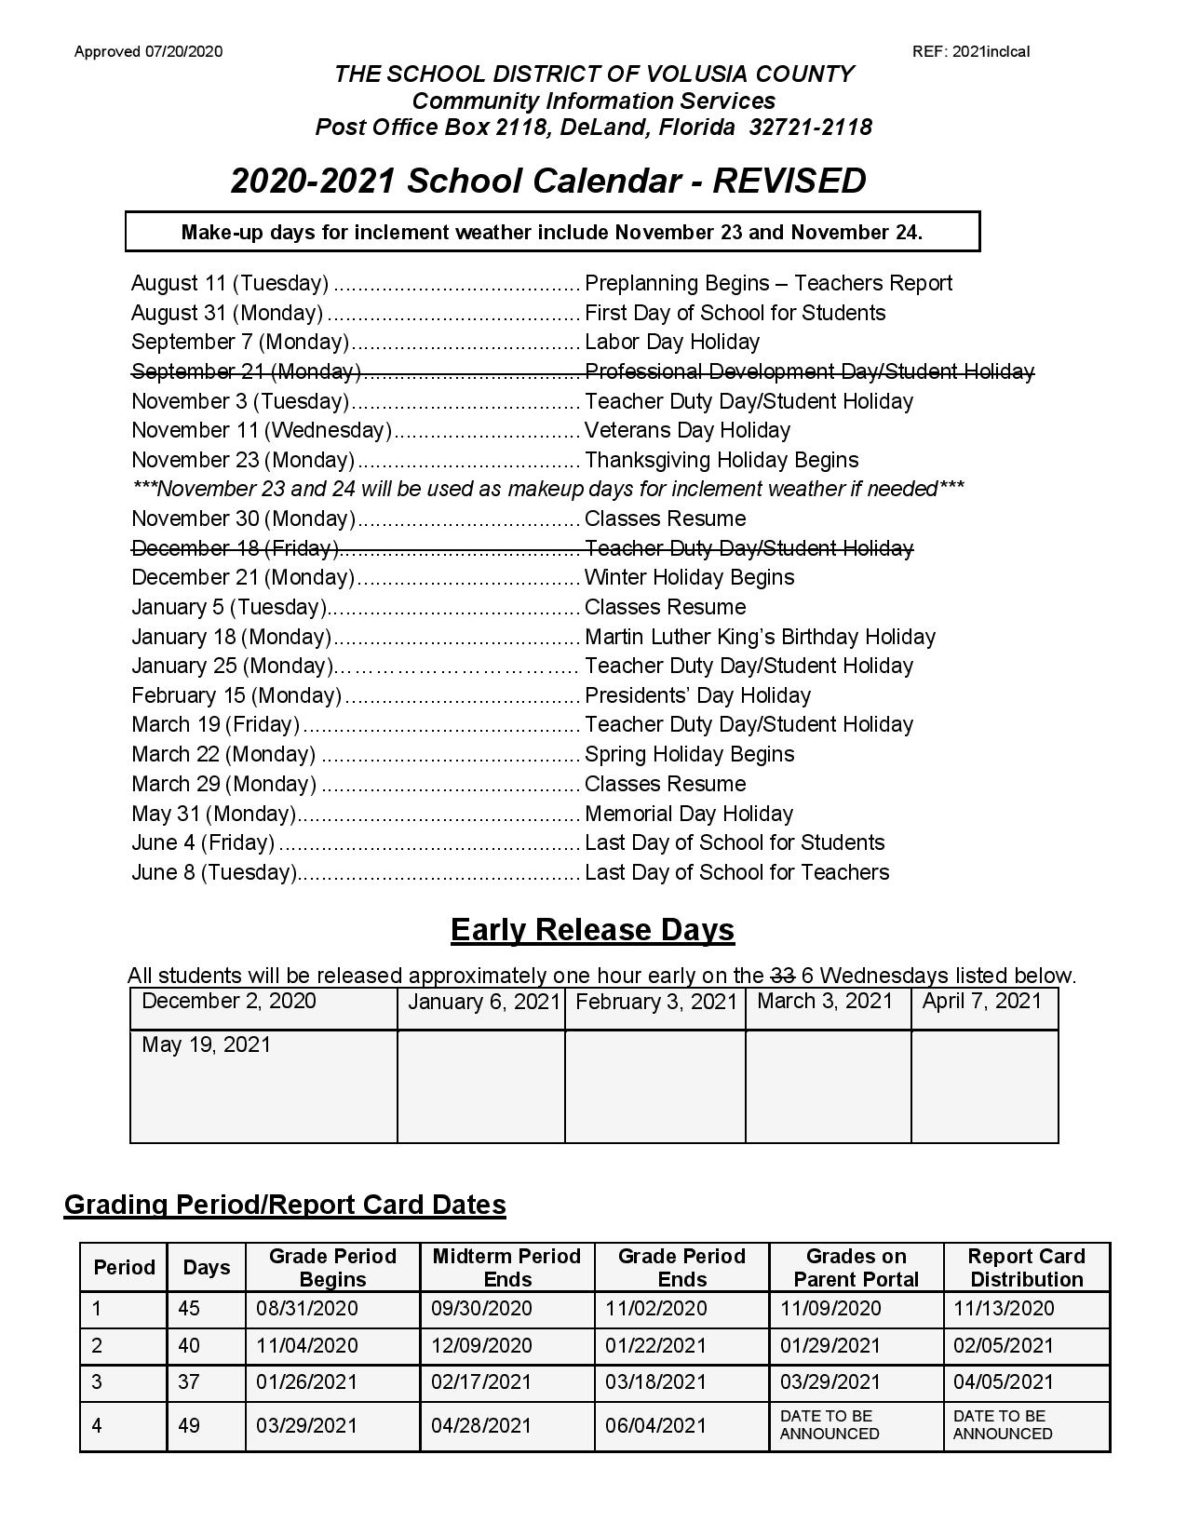 Volusia County Schools Calendar 20202021 in PDF